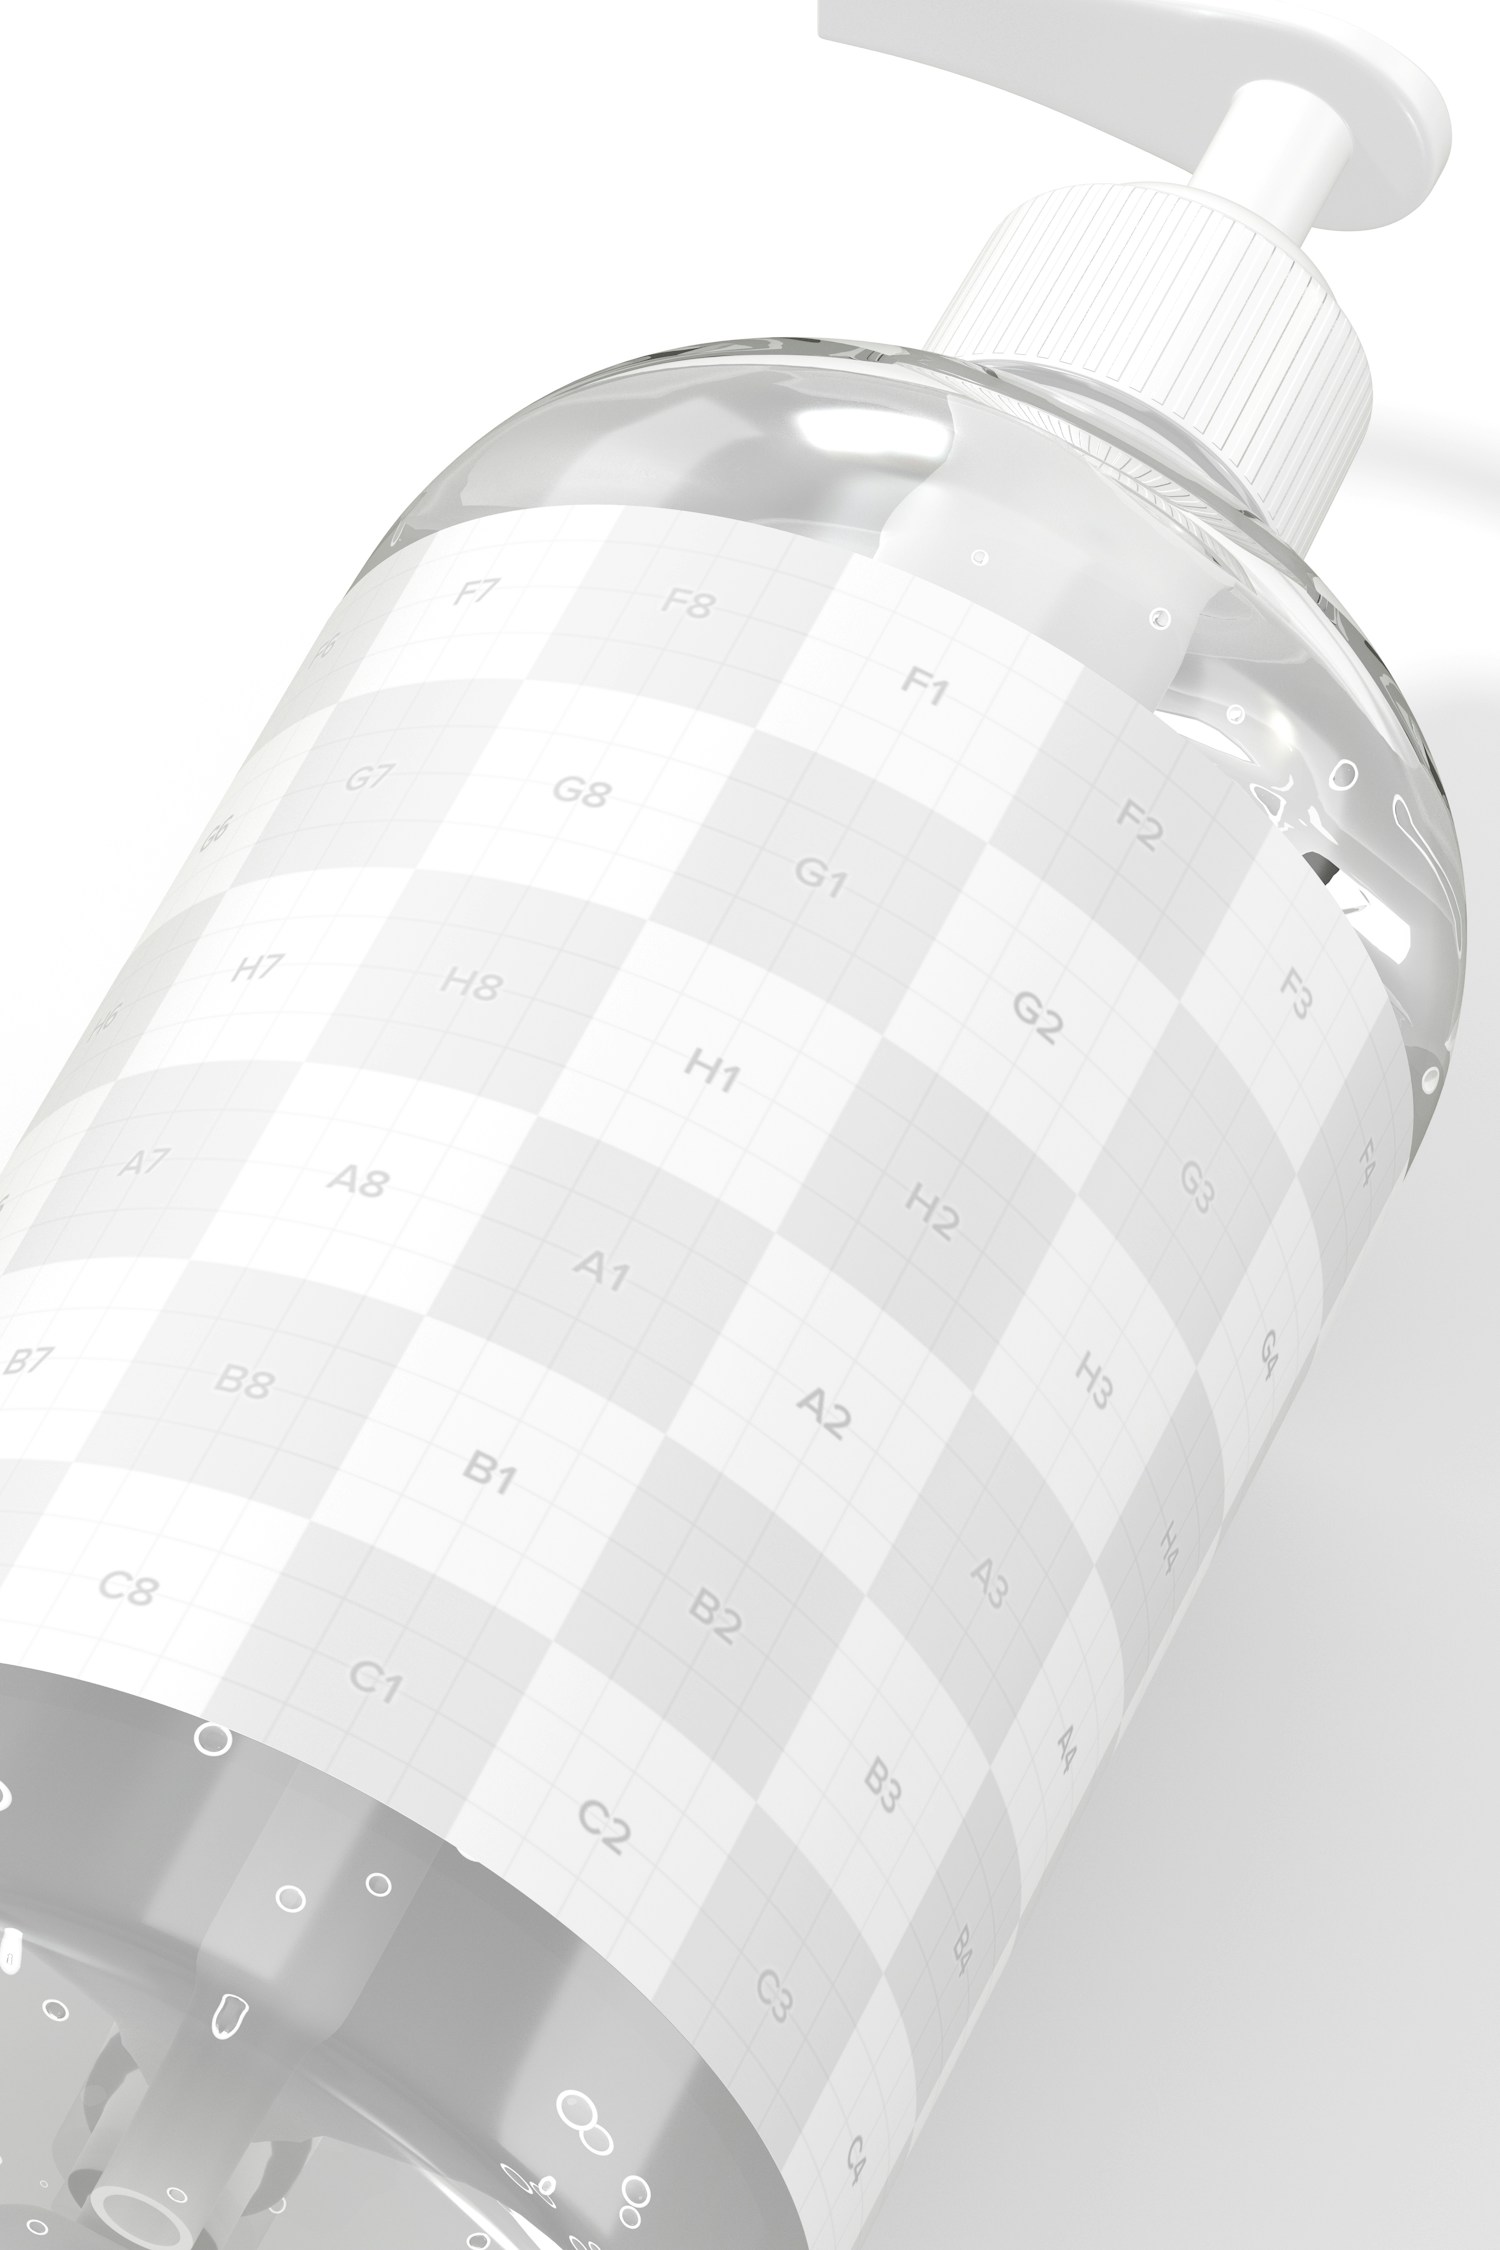 16 oz Sanitizing Gel Bottle Mockup, Close-up